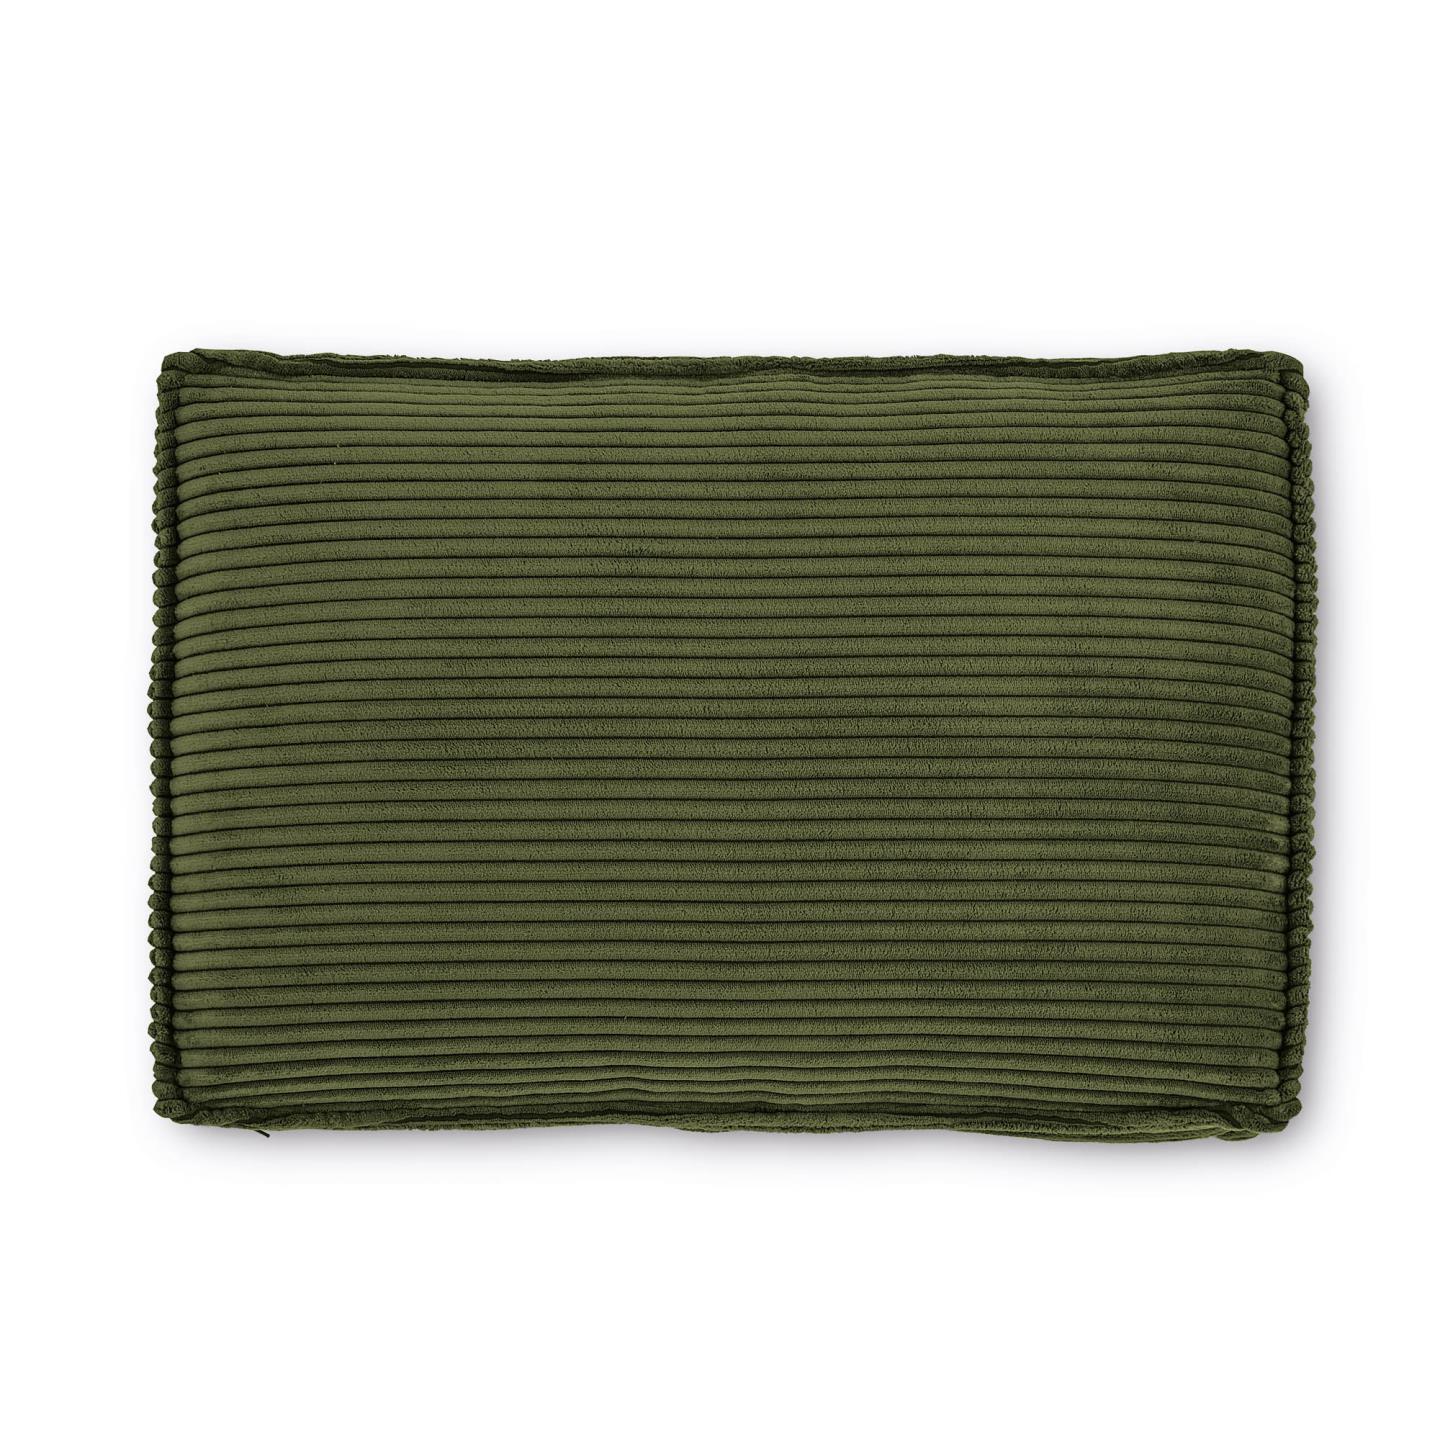 Blok cushion in green wide seam corduroy, 40 x 60 cm